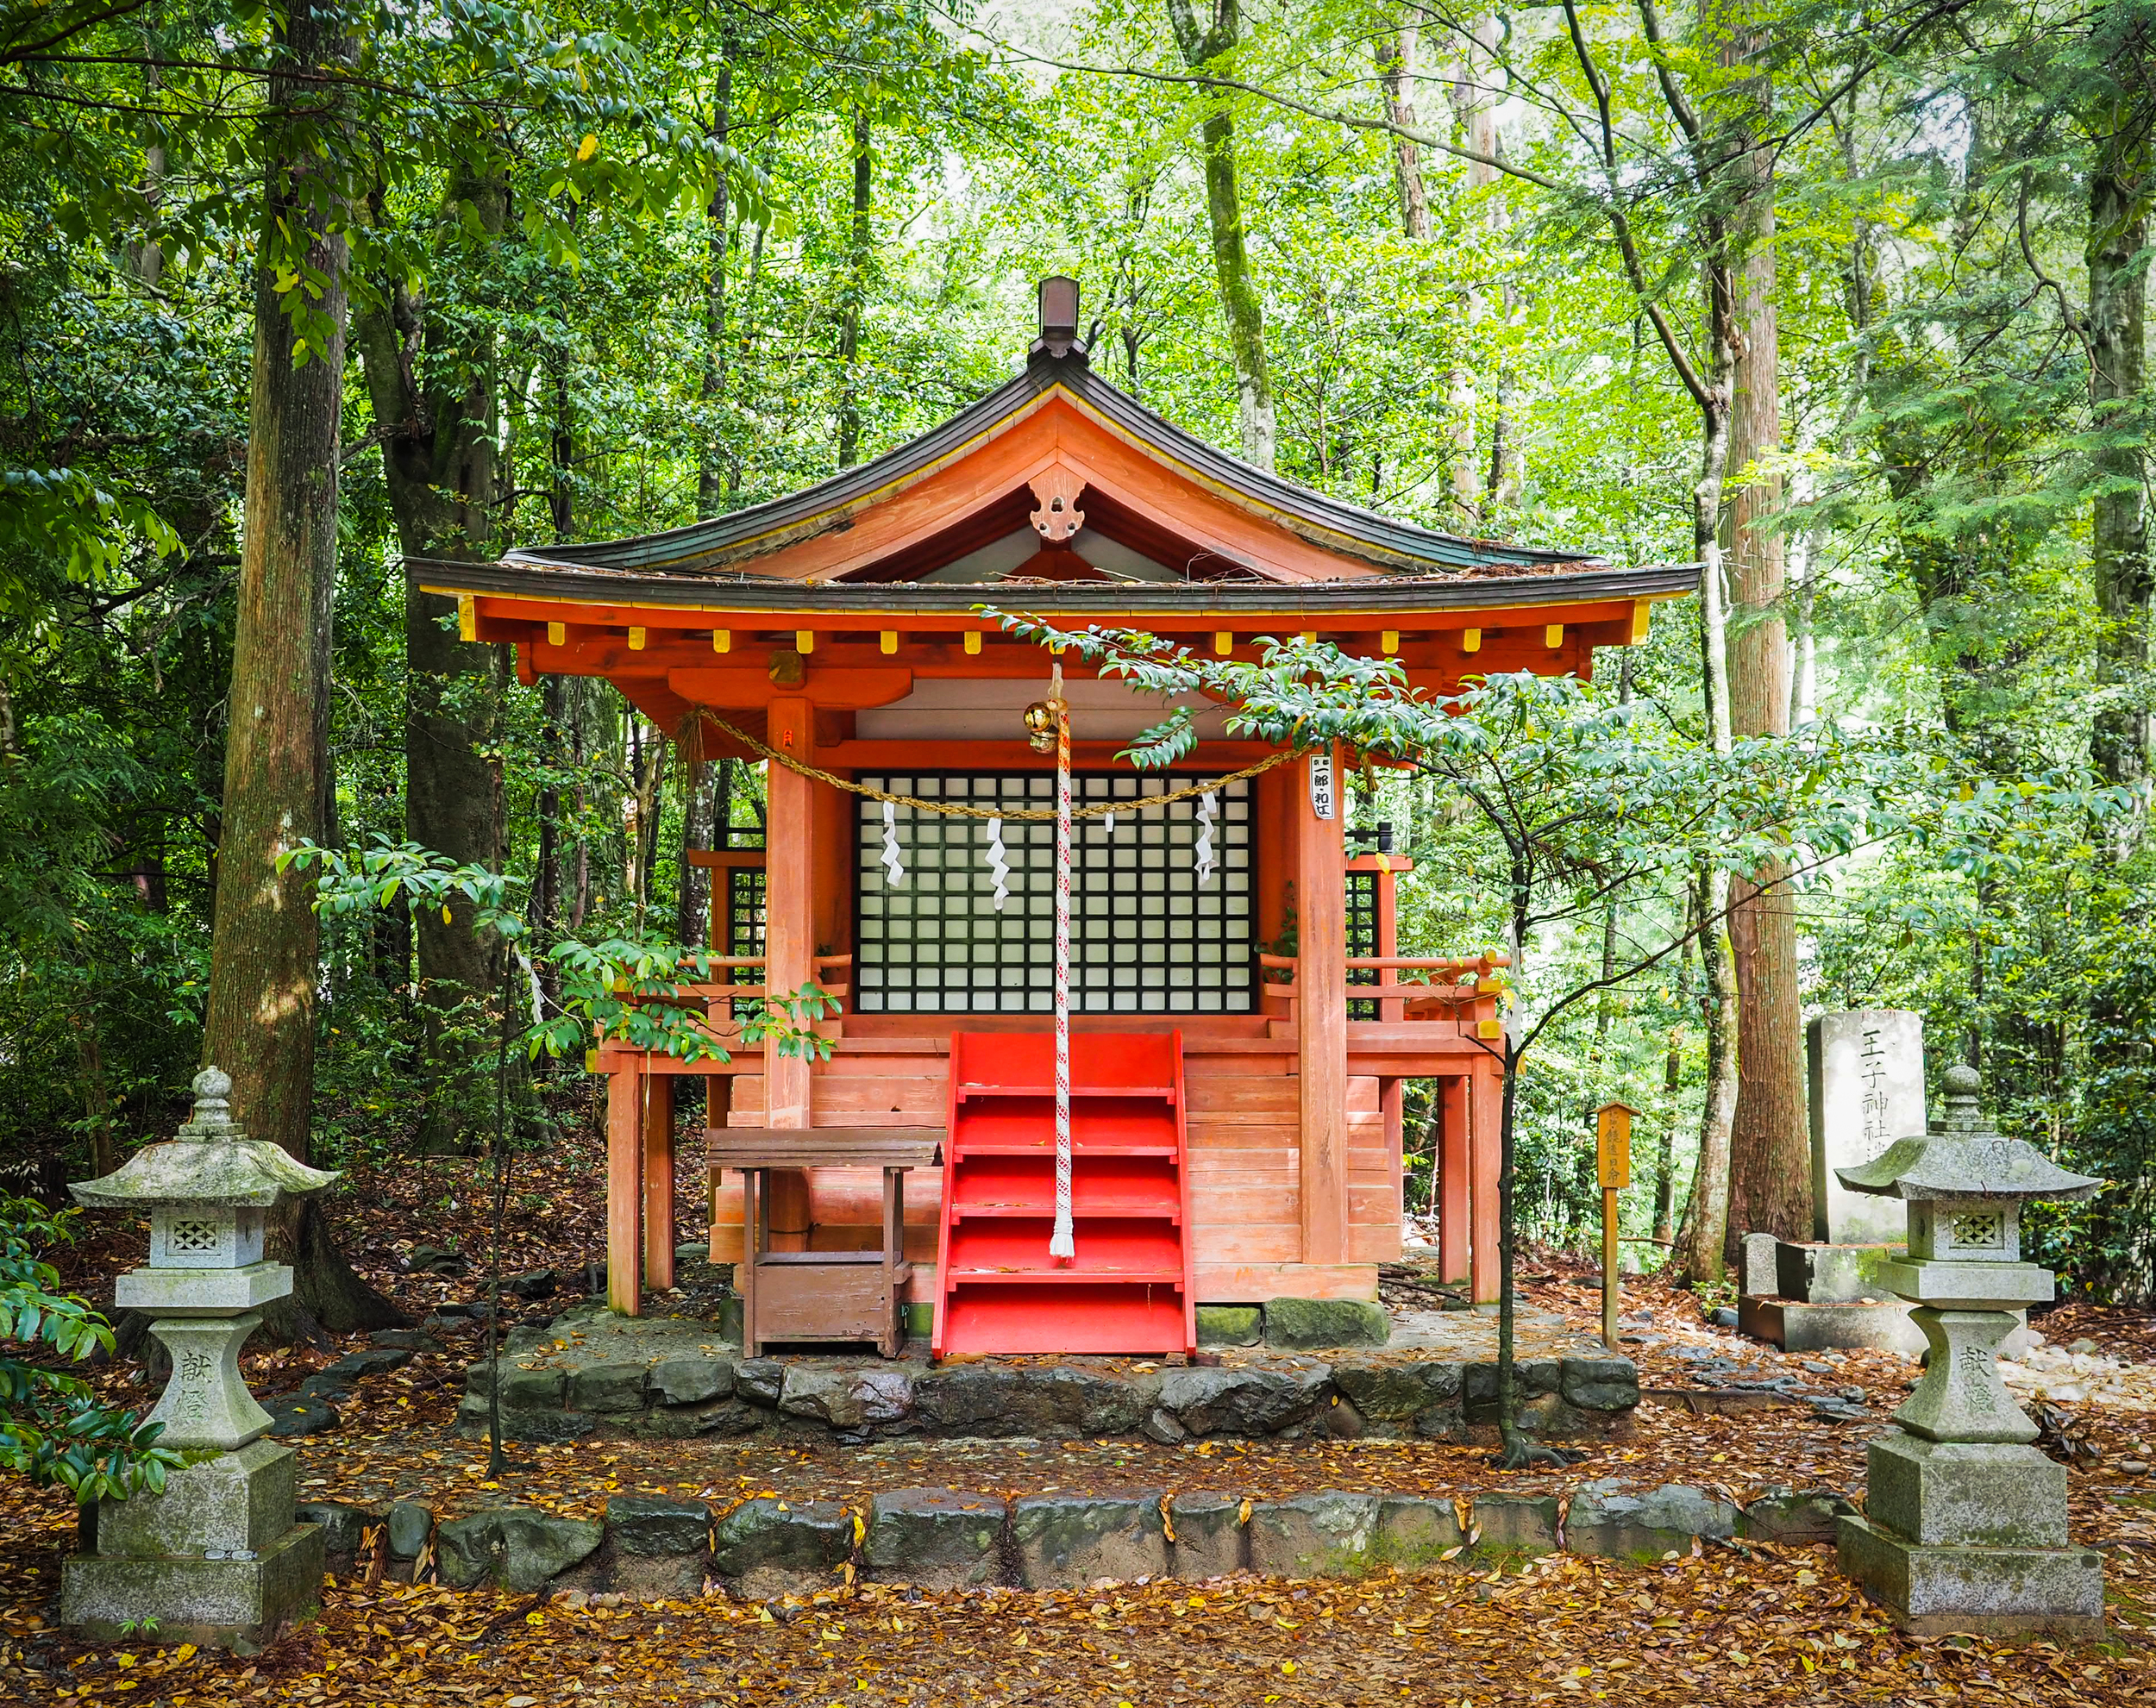 A small shrine along the way